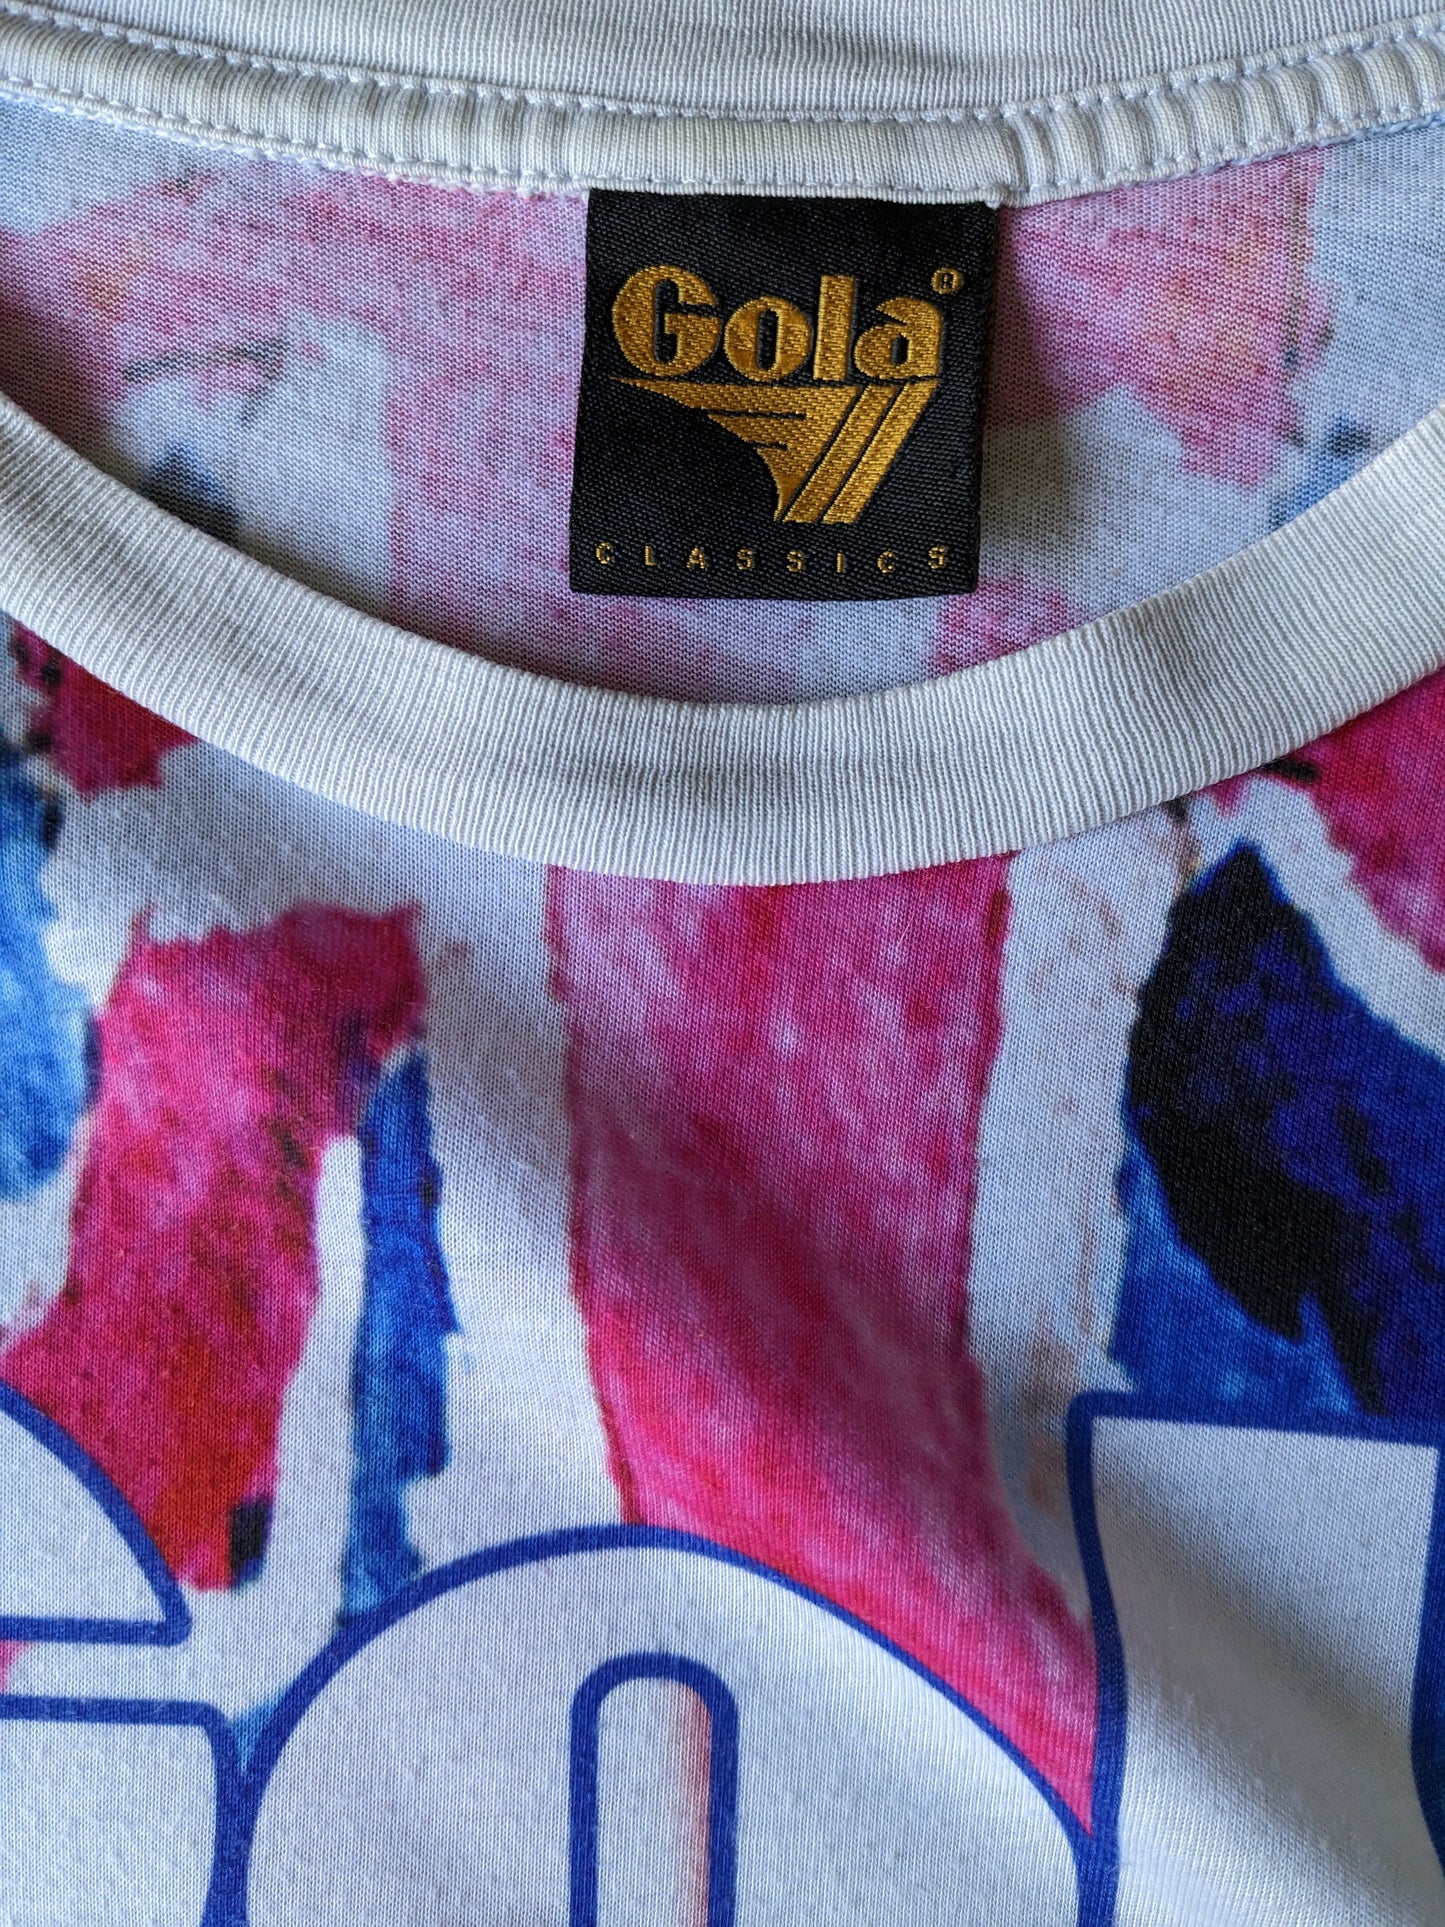 Gola Classics shirt. Blue white pink print. Size M.